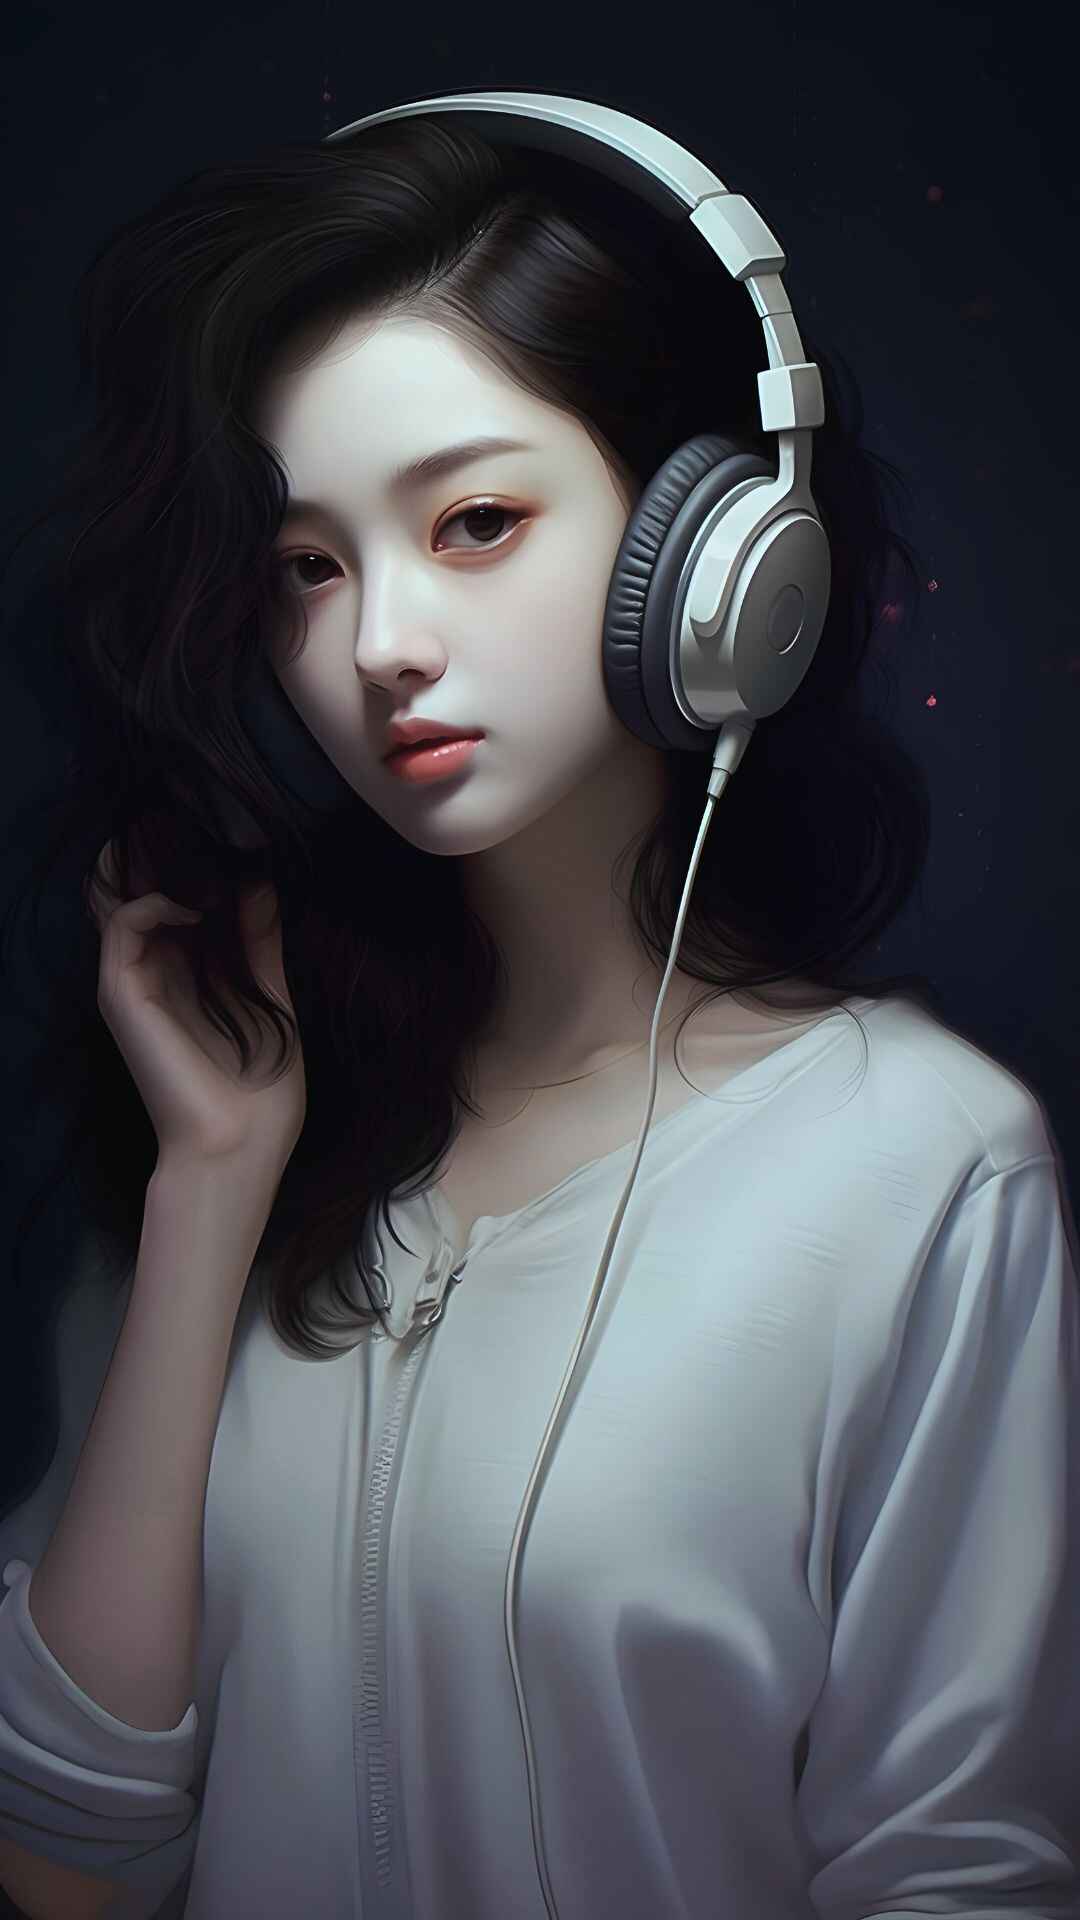 Anime Girl With Headphones Aesthetic Wallpaper